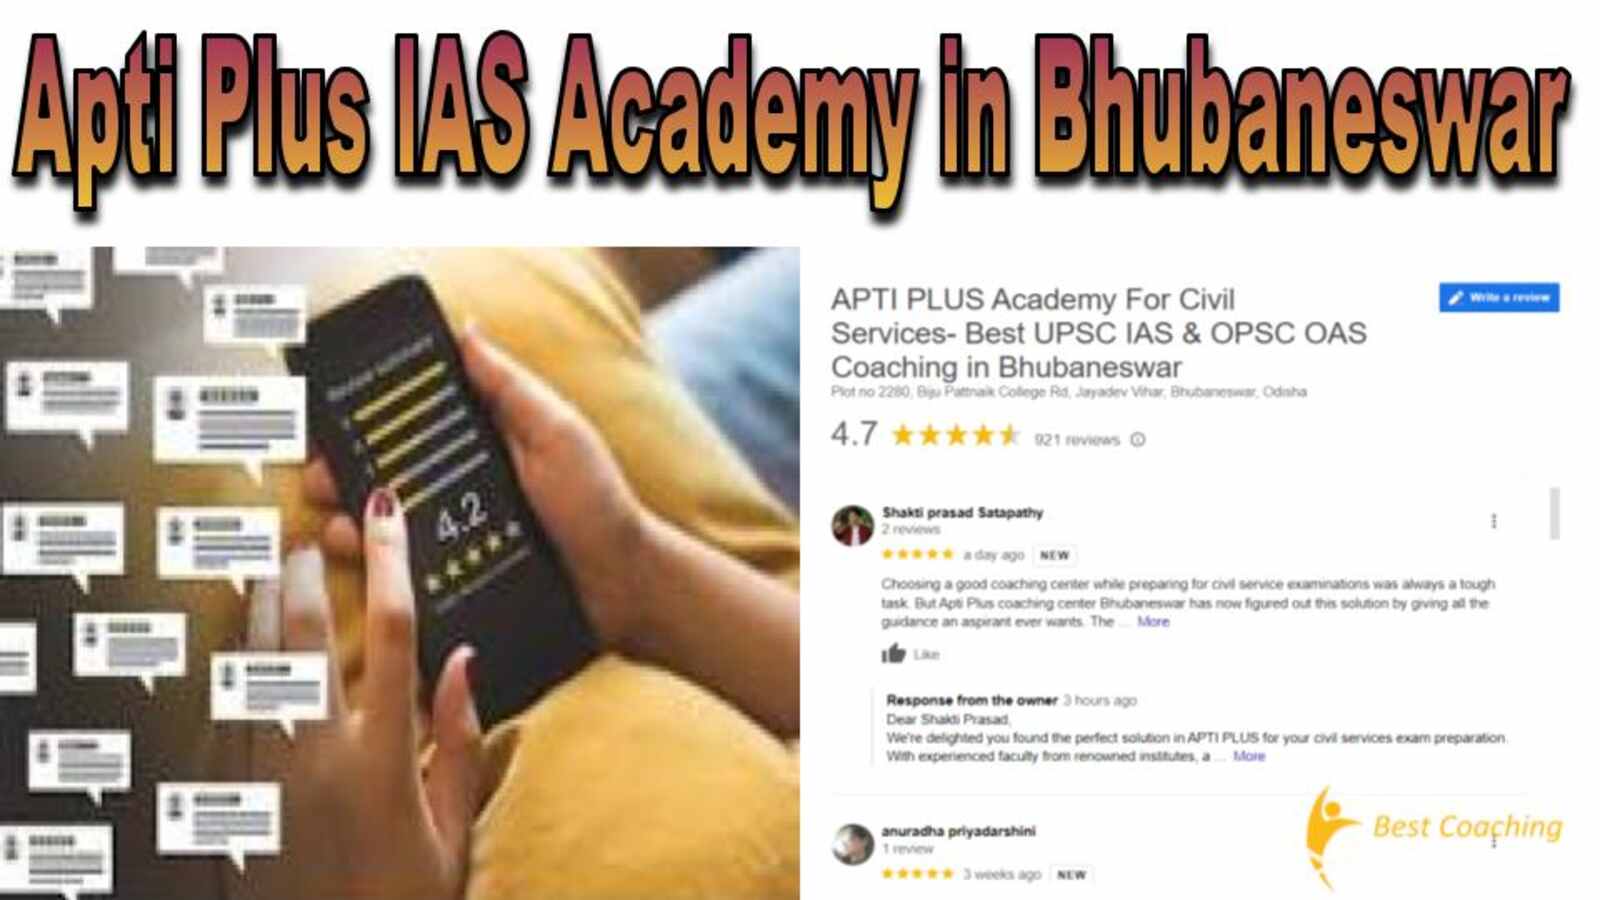 Apti Plus IAS Academy in Bhubaneswar